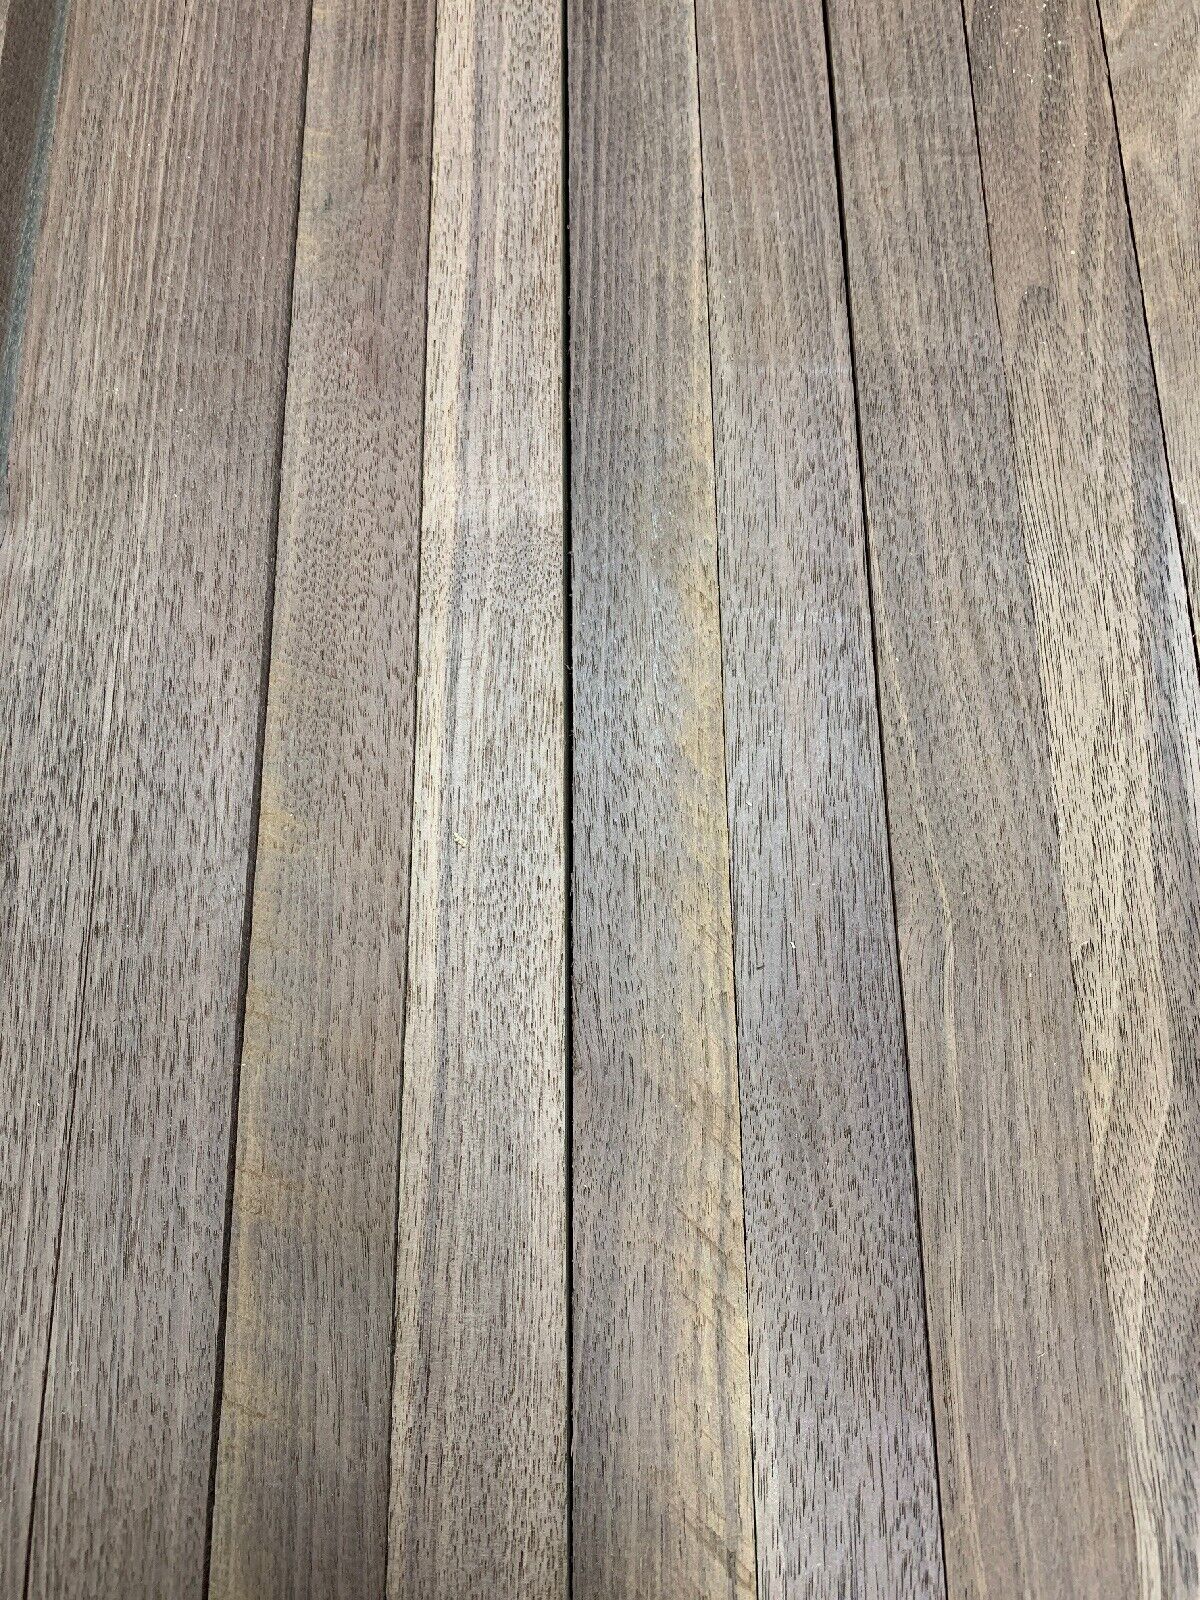 12 Boards, BLACK WALNUT Lumber Dried (3/4”x 2”x 21”), DIY Wood